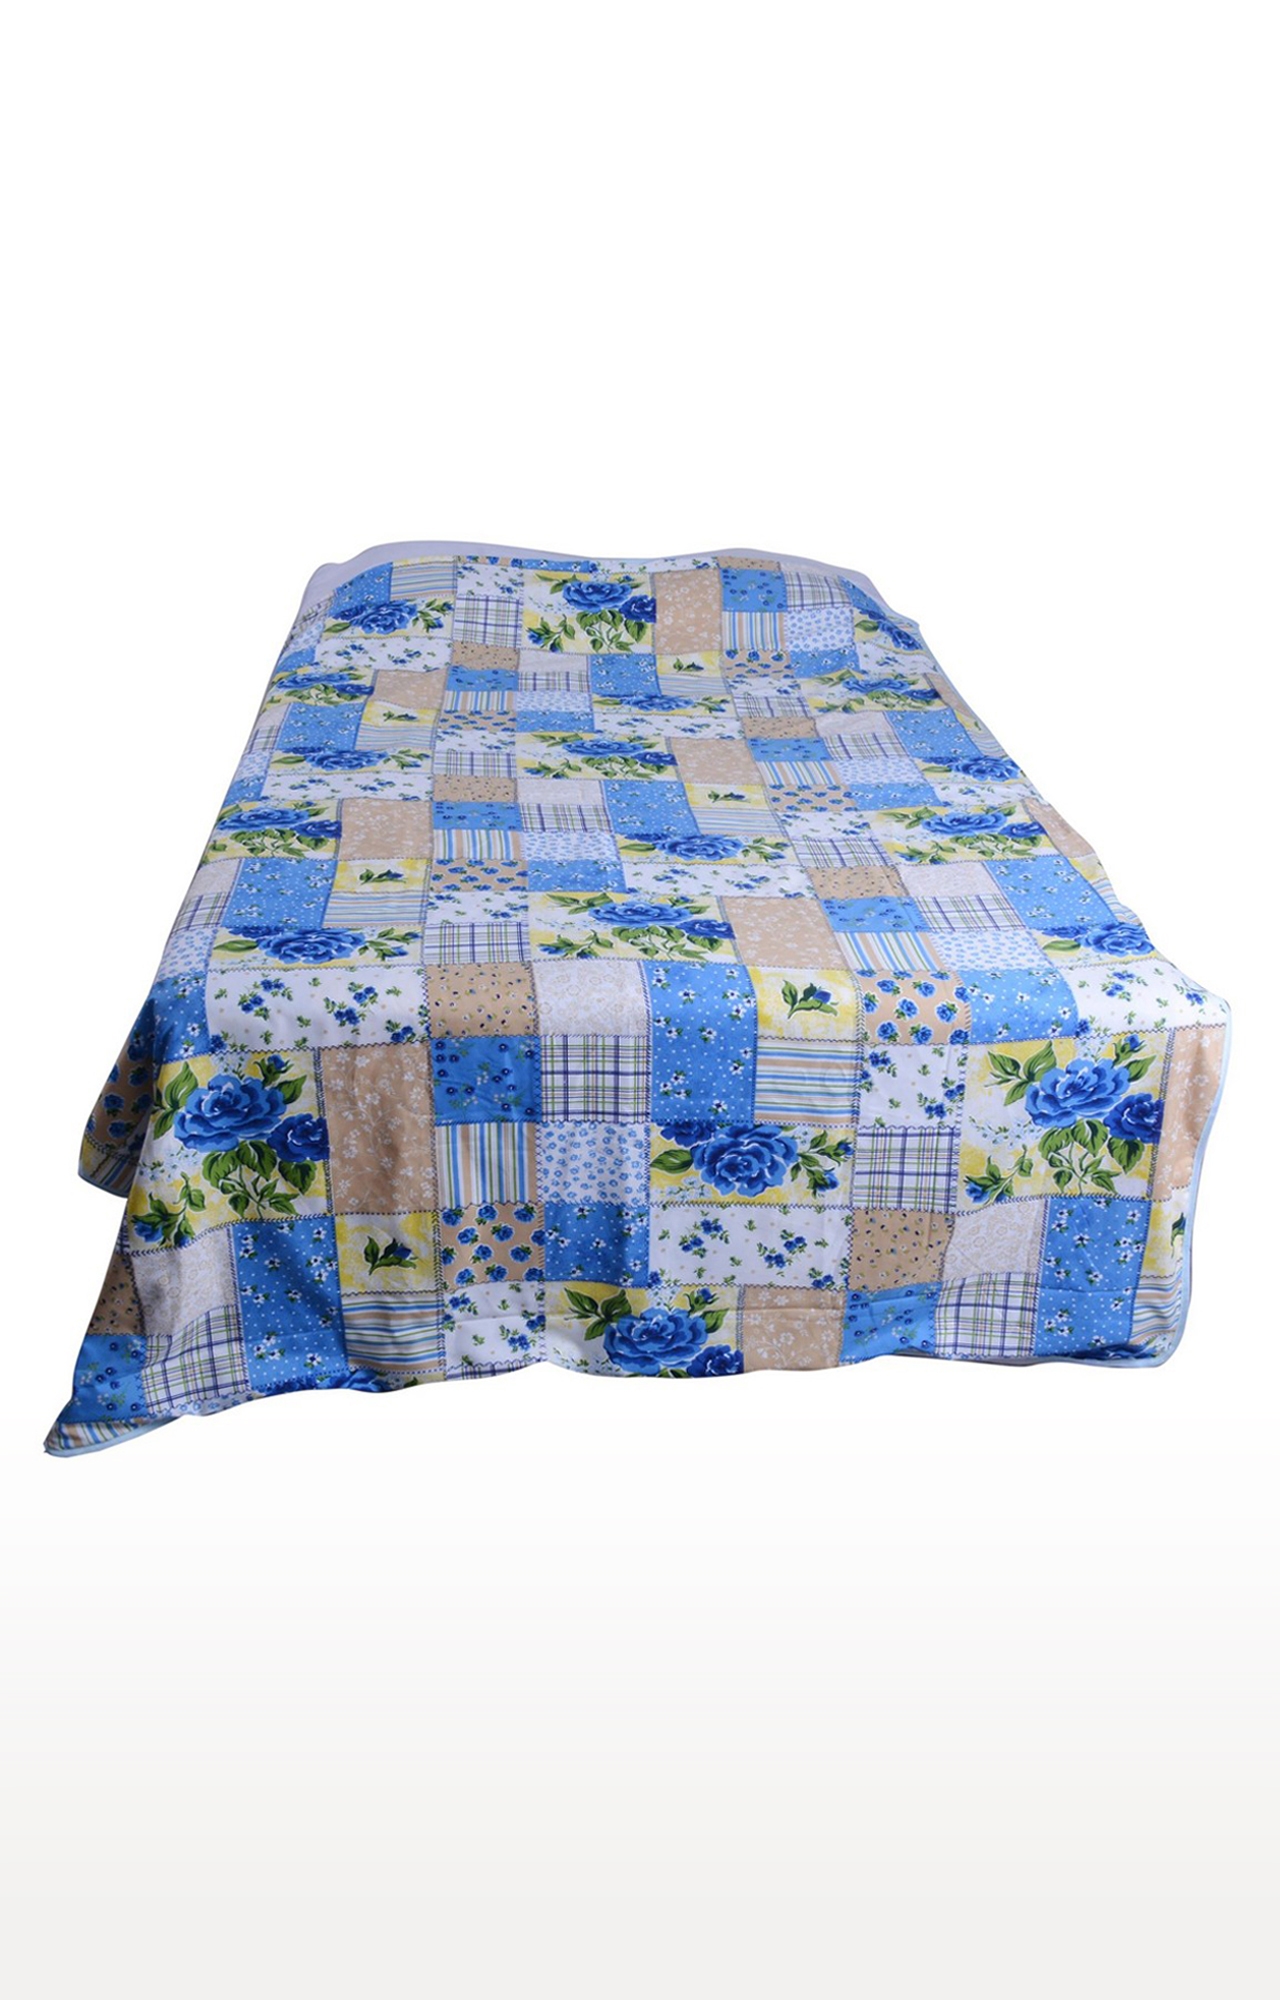 V Brown | Blue Checks & Flower Printed Cotton 3 Layer Single Bed Quilt Dohar 0